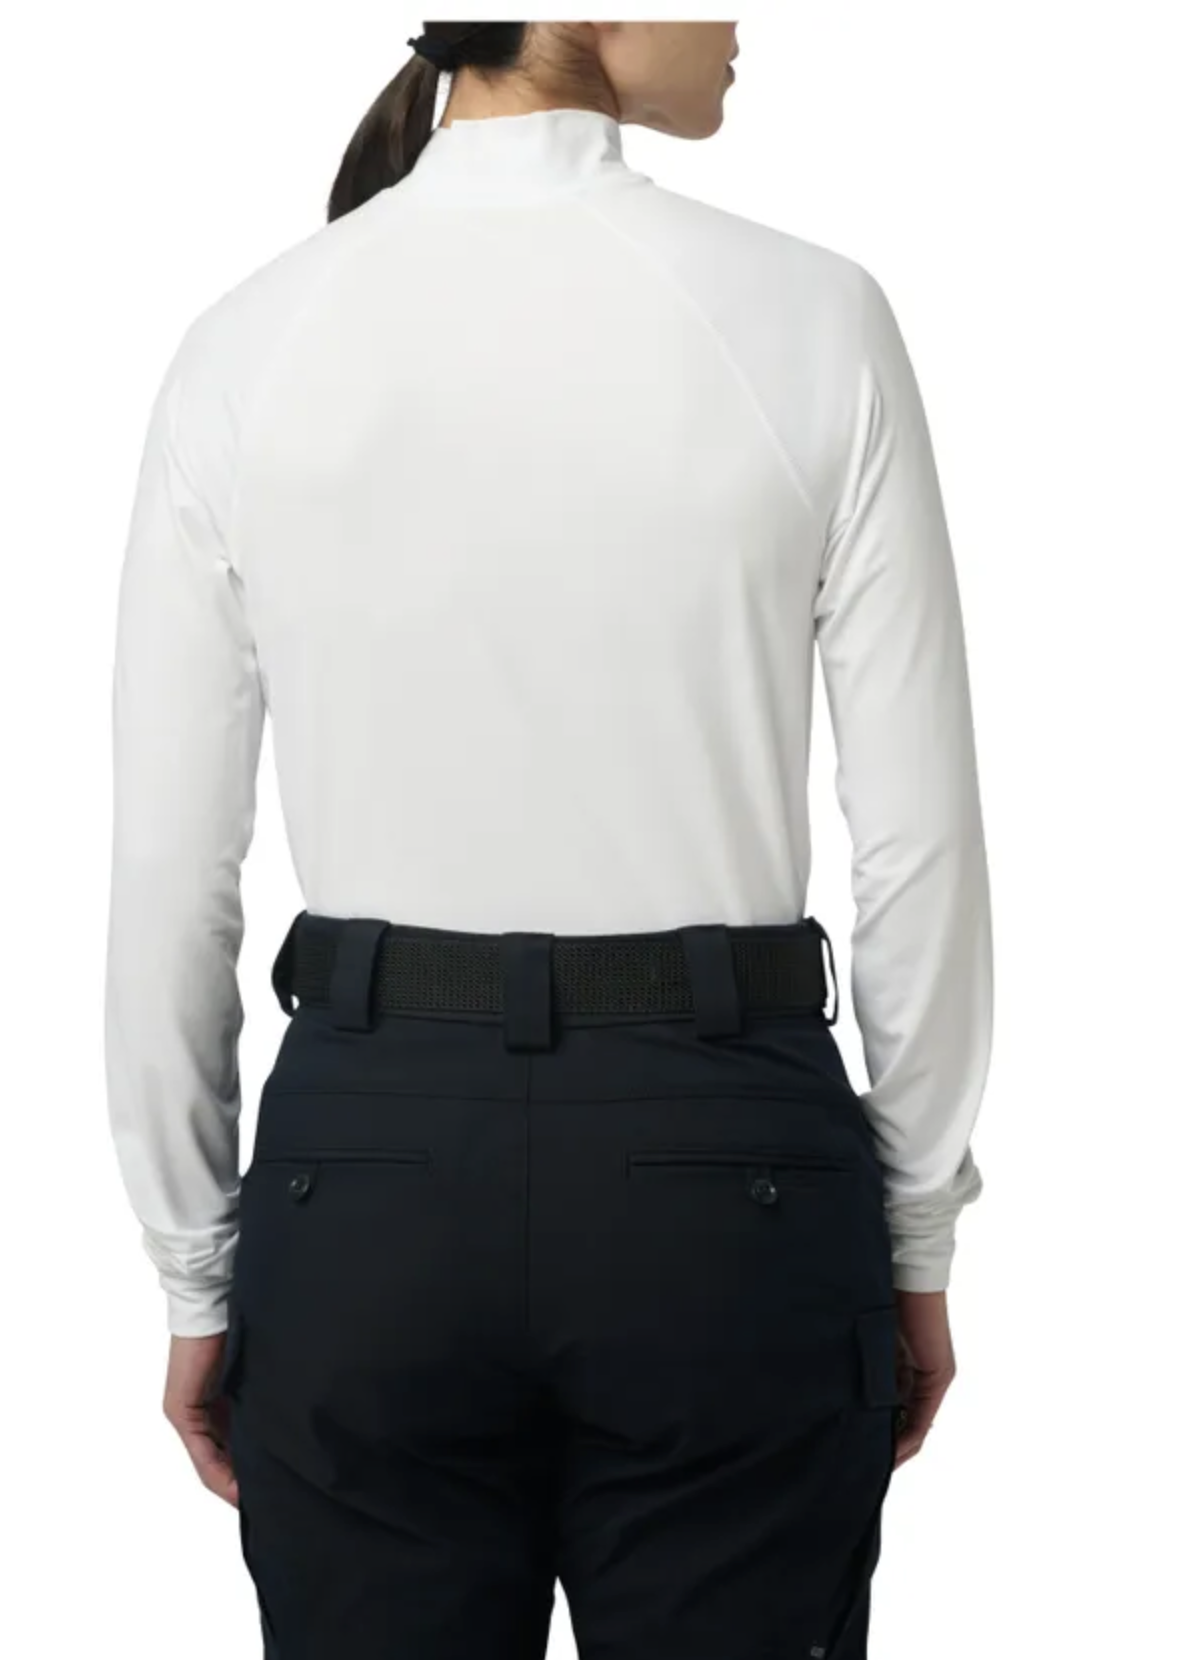 5.11 - Women's Mock Neck Long Sleeve Top - Uniform White (992)